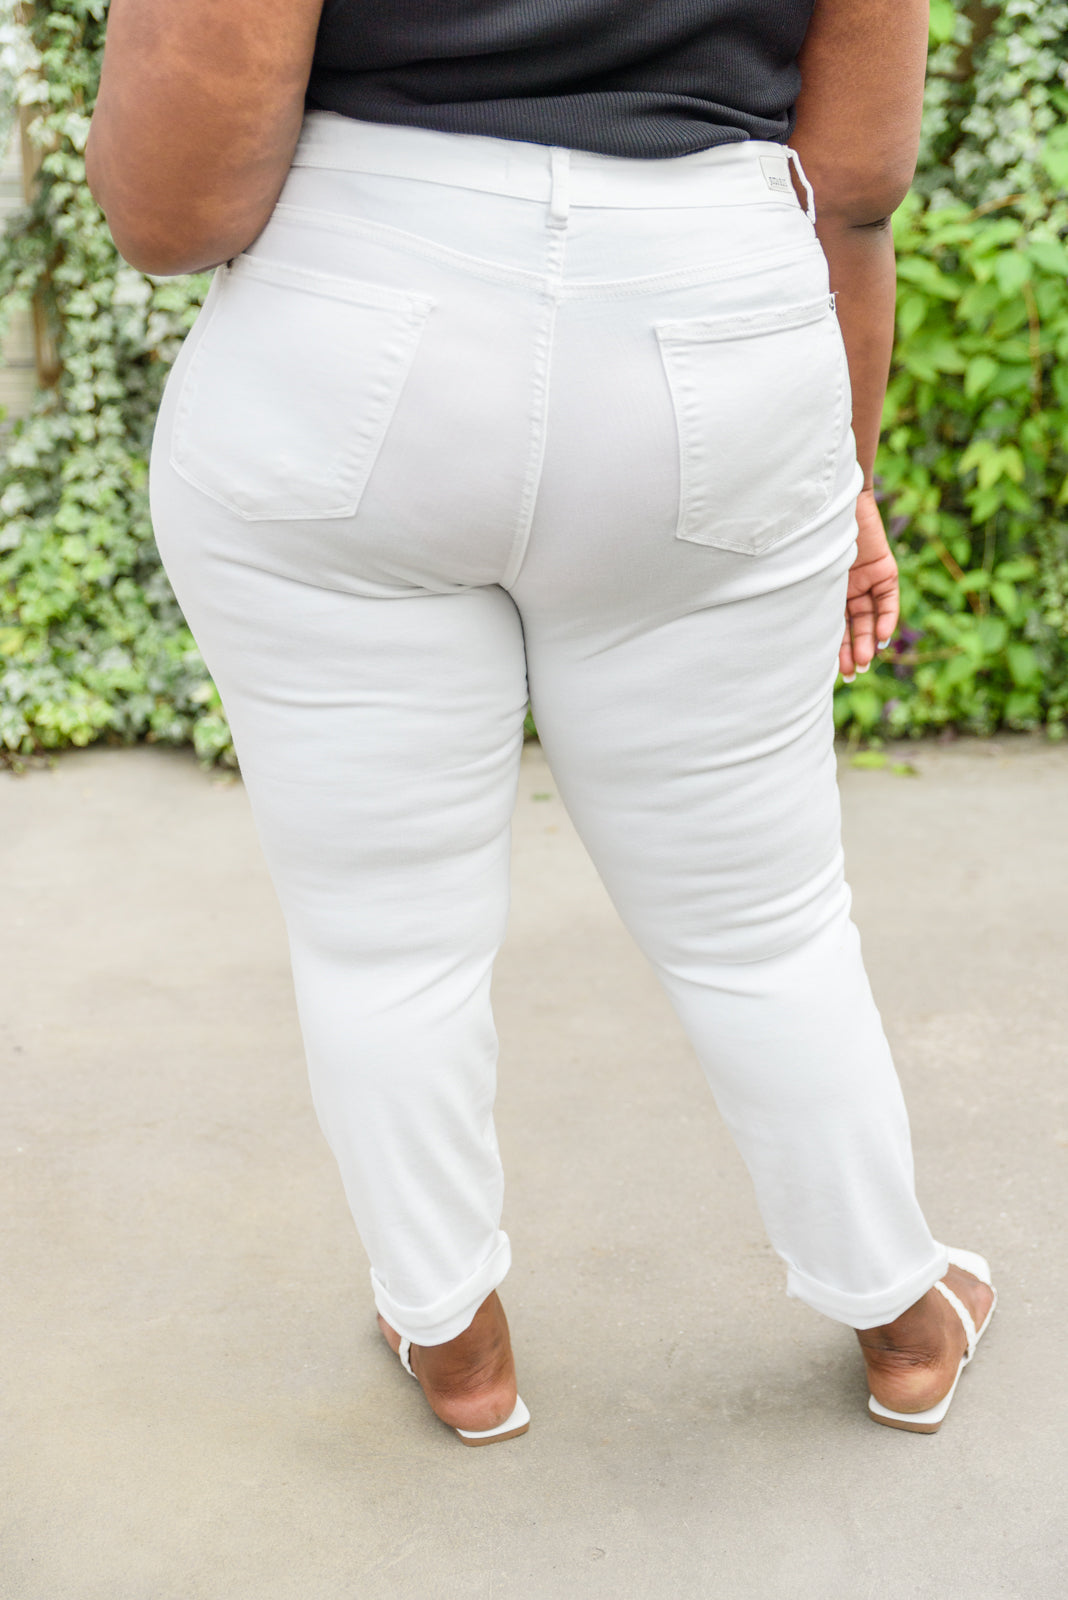 Judy Blue Mid-Rise Boyfriend Destroyed White Jeans-Jeans-Krush Kandy, Women's Online Fashion Boutique Located in Phoenix, Arizona (Scottsdale Area)